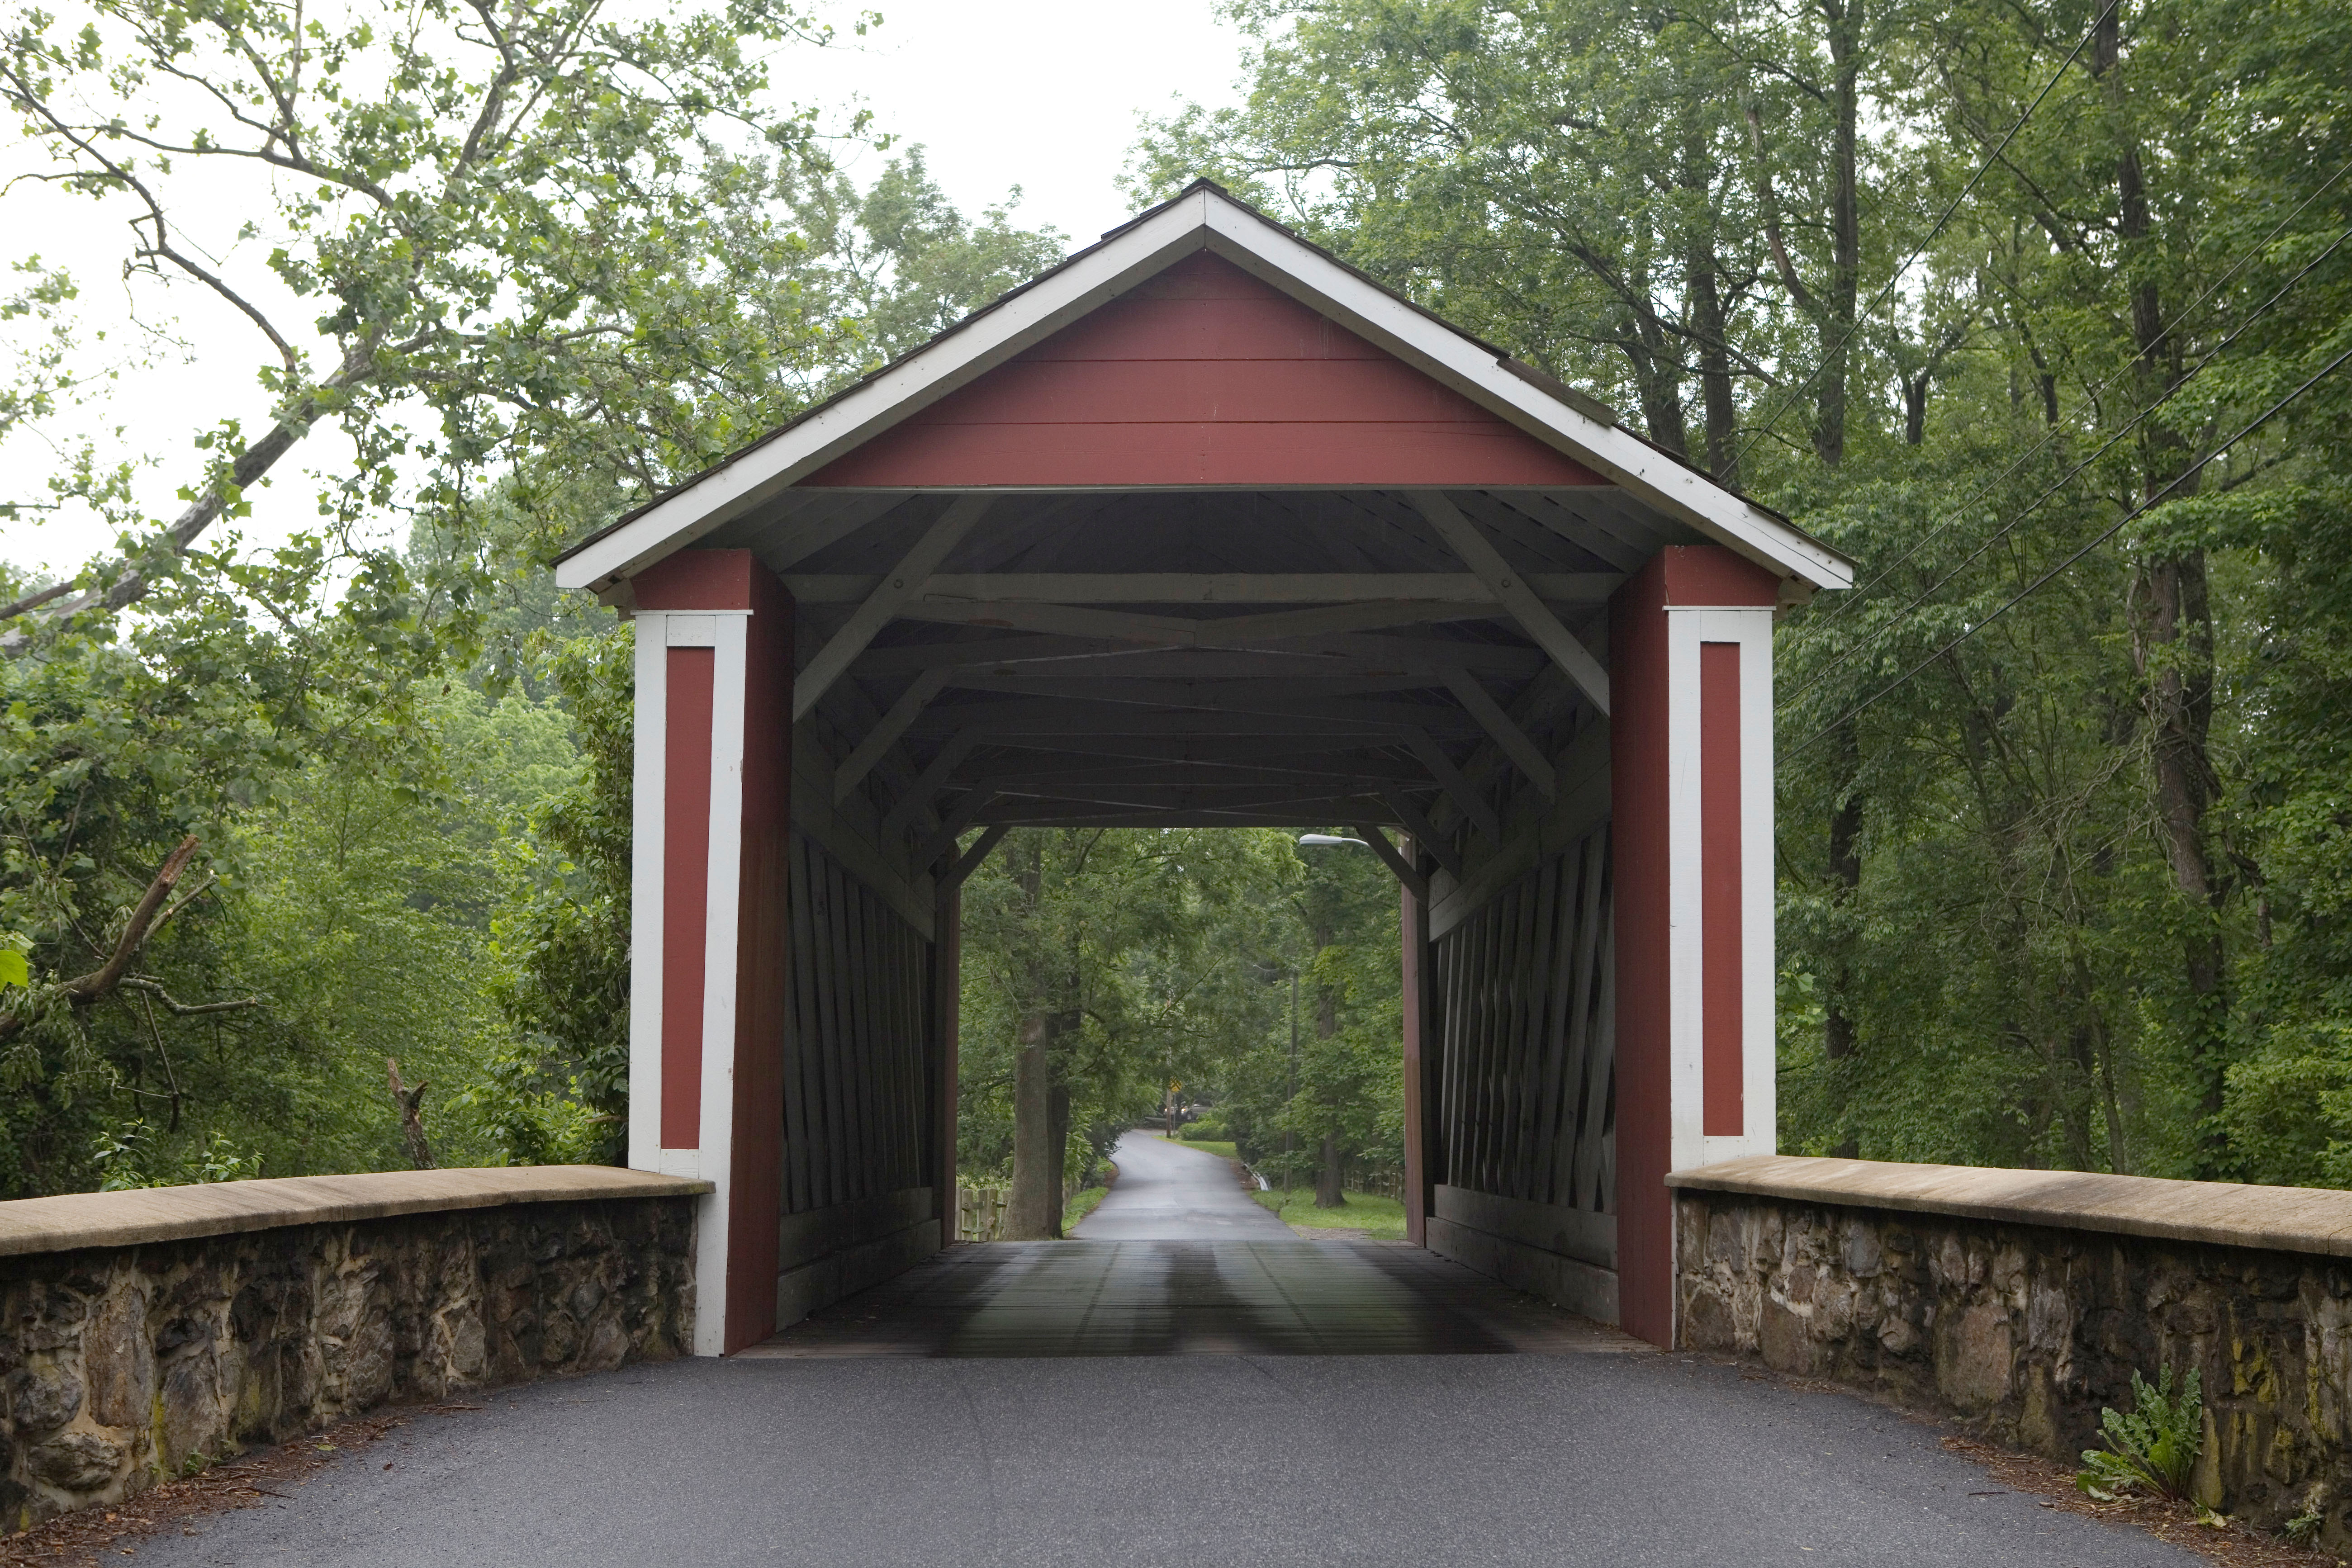 Ashland Covered Bridge over Red Clay Creek, Hockessin, Delaware. Photo by Janet Worne